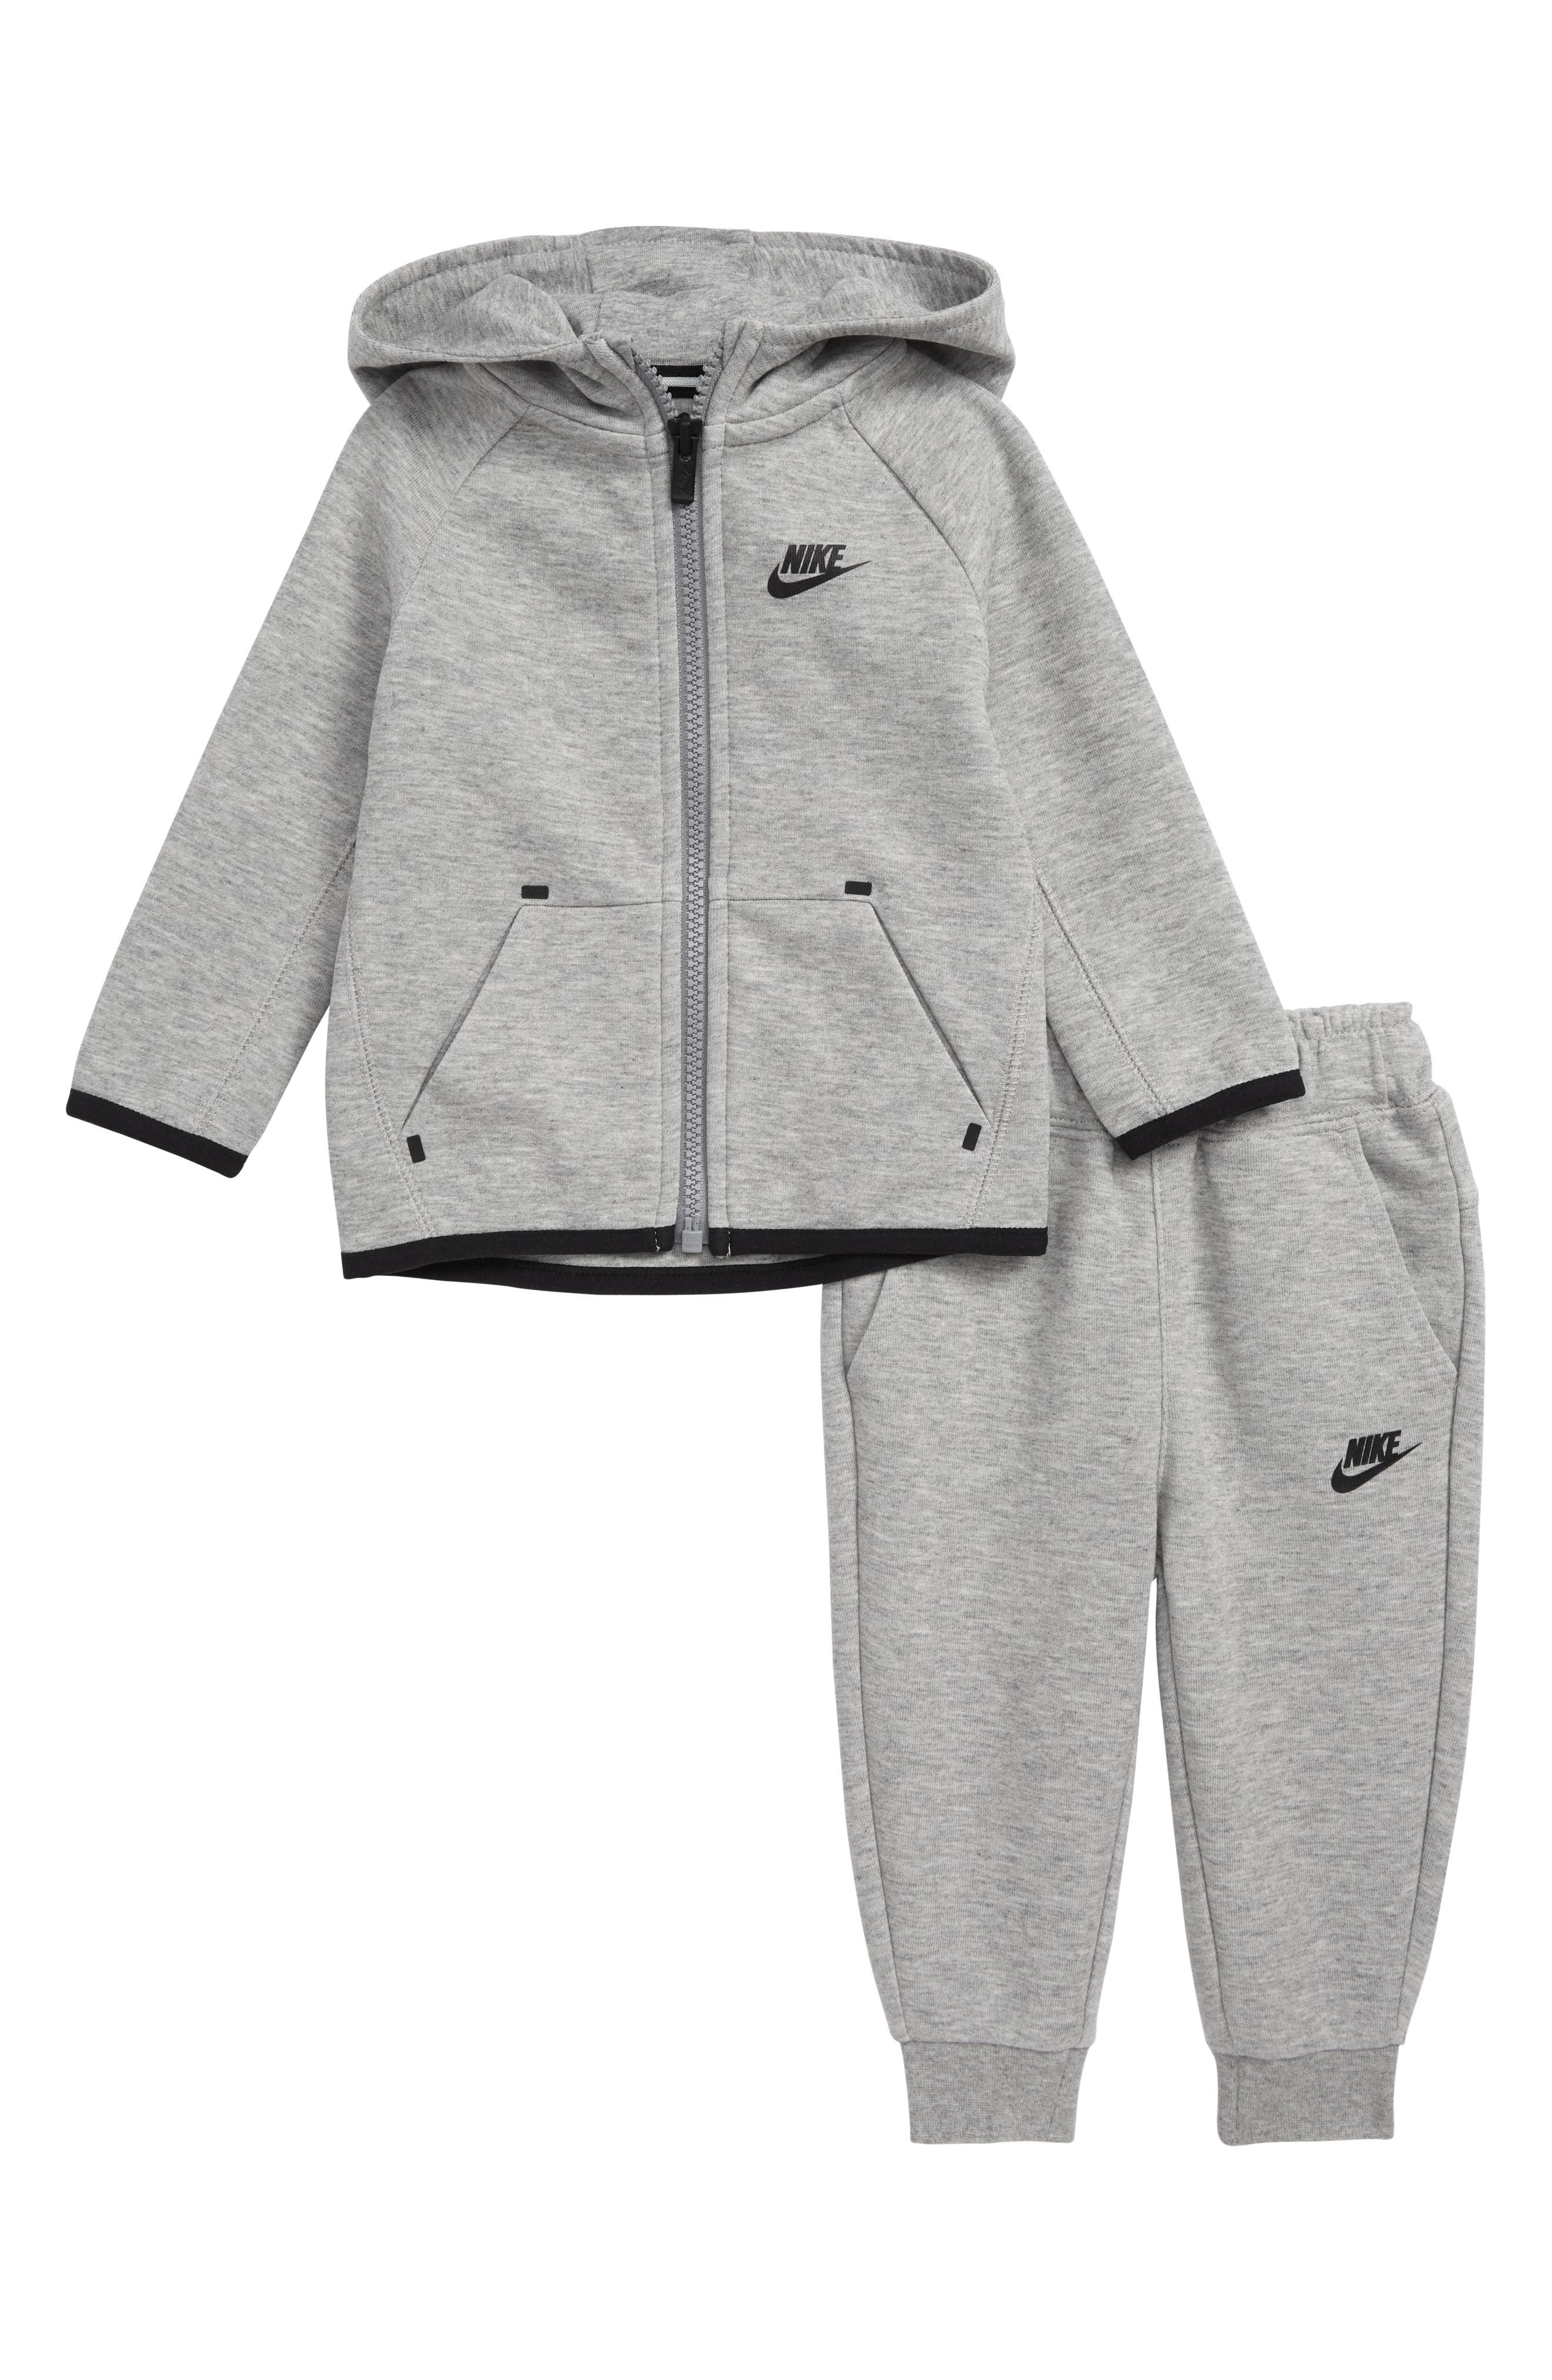 grey nike hoodie and sweatpants